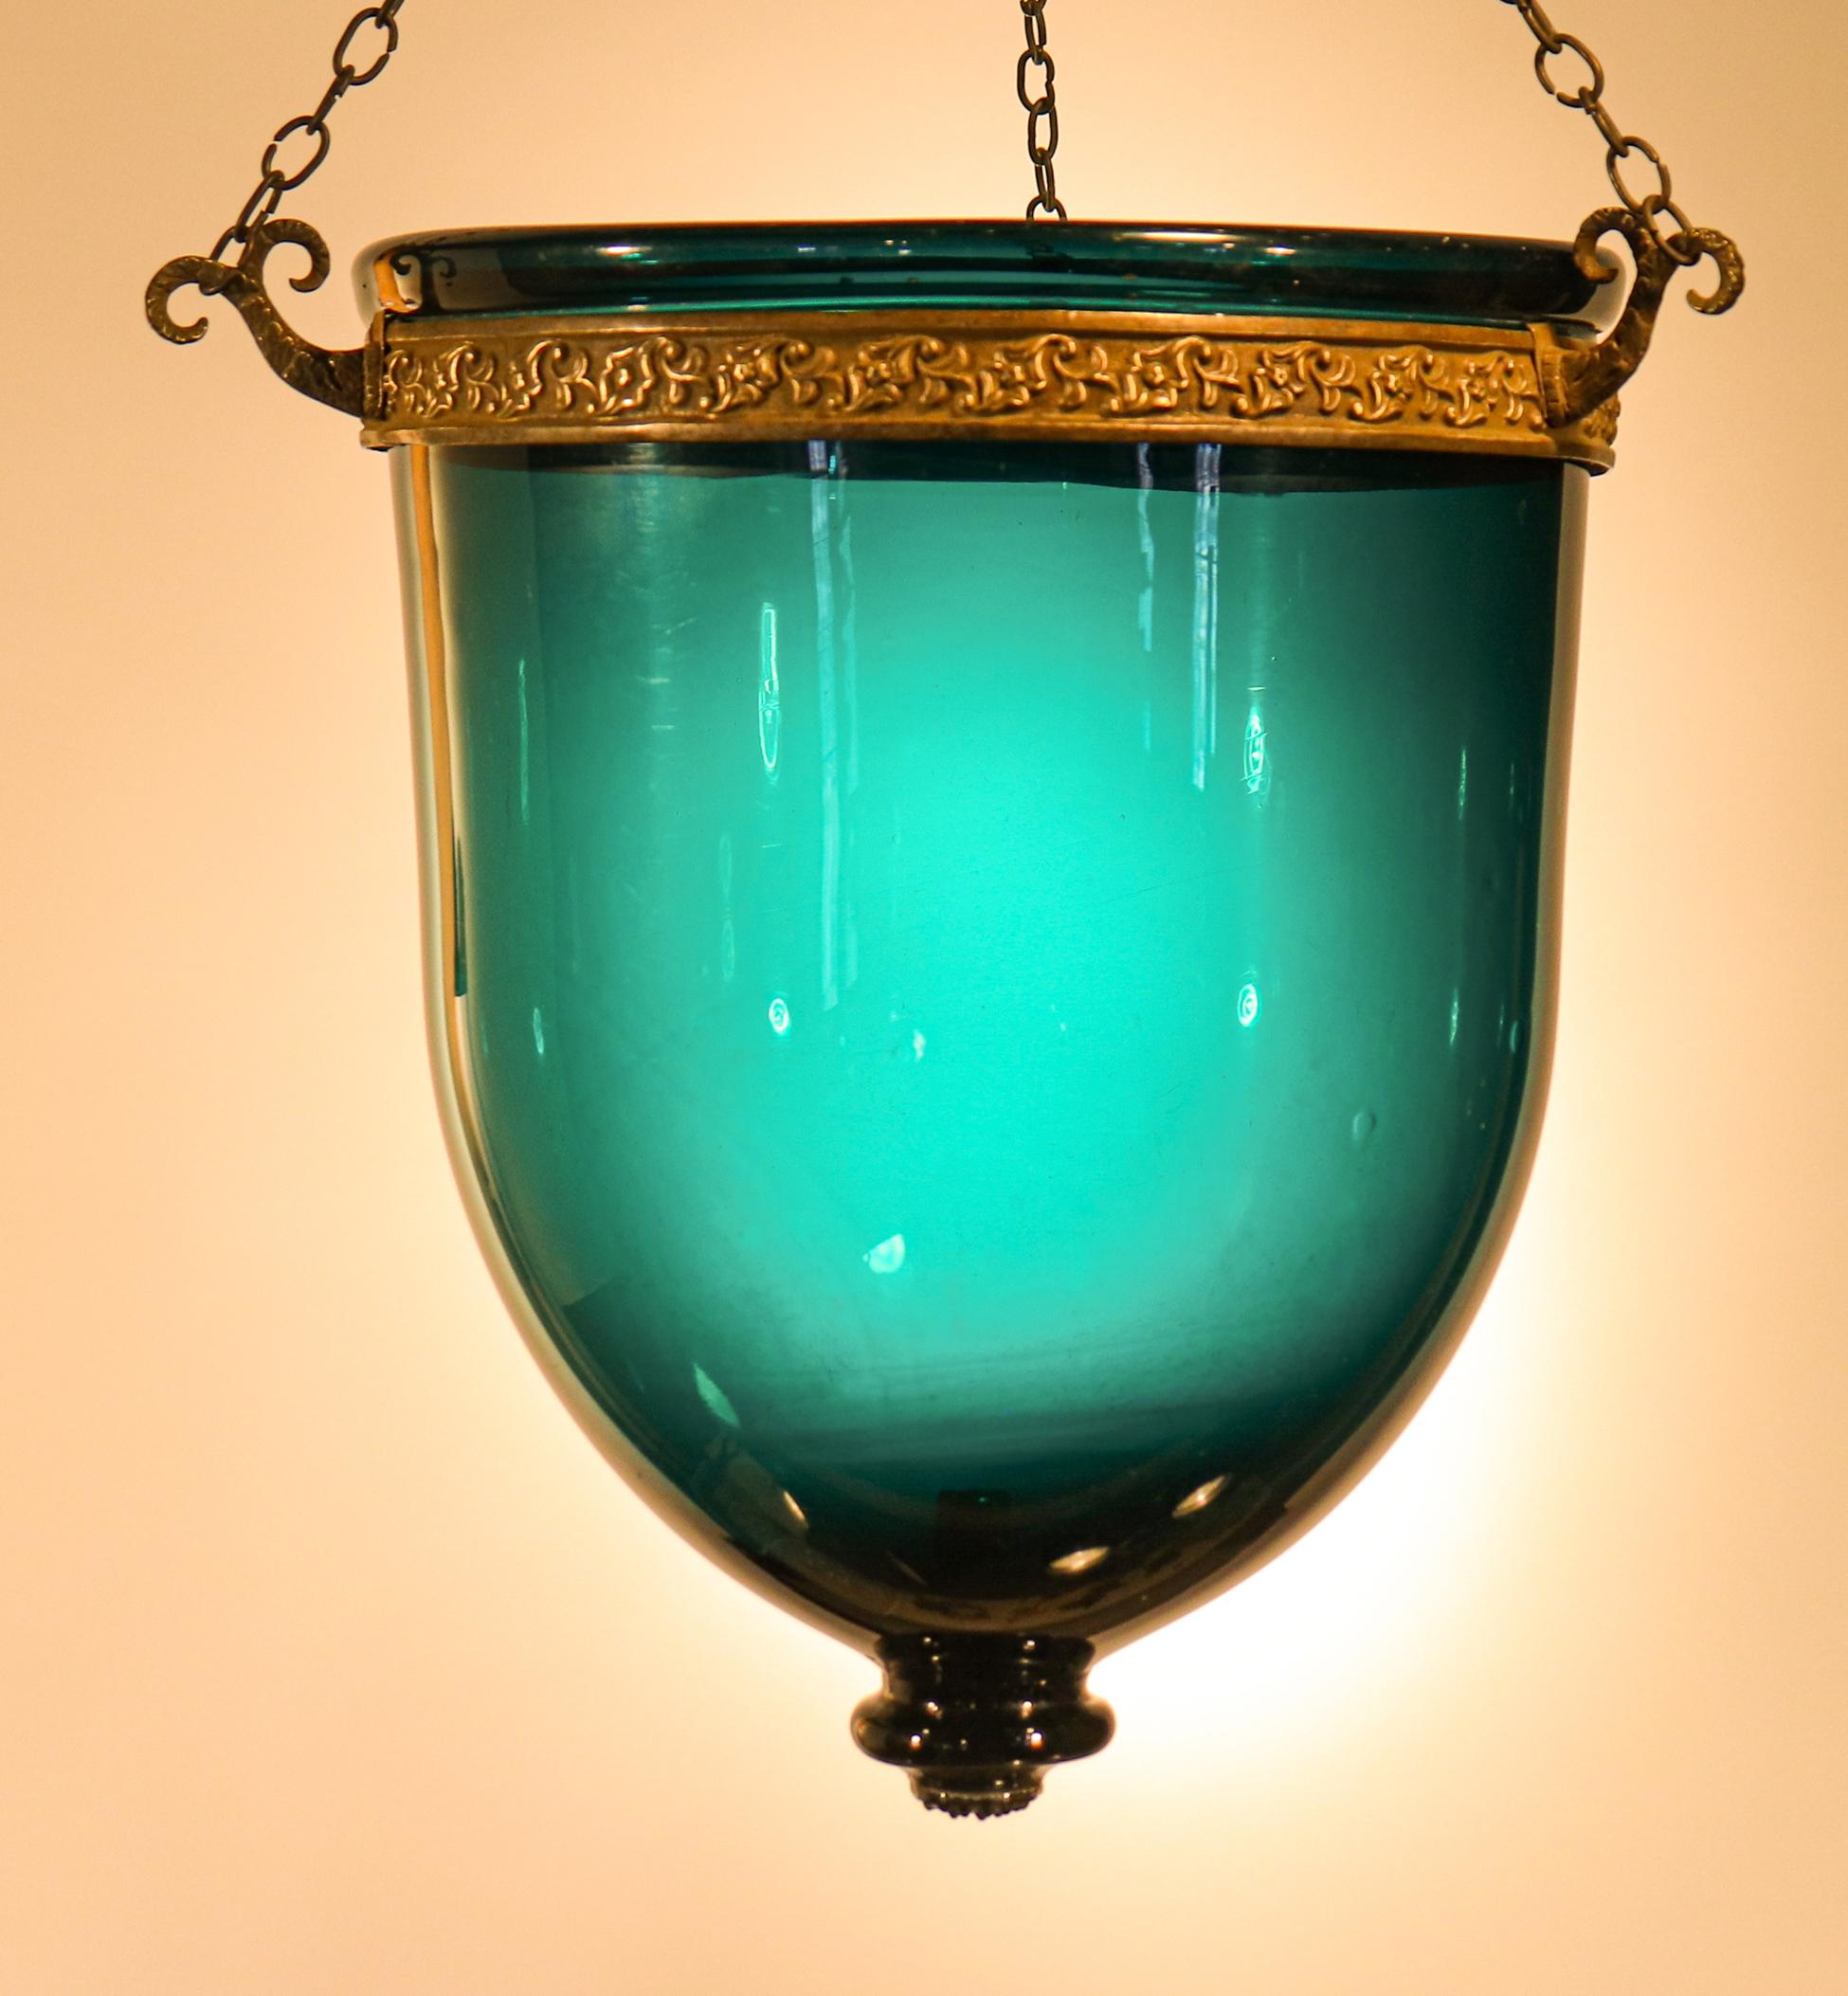 Antique Blue Green Teal Bell Jar Lantern 2